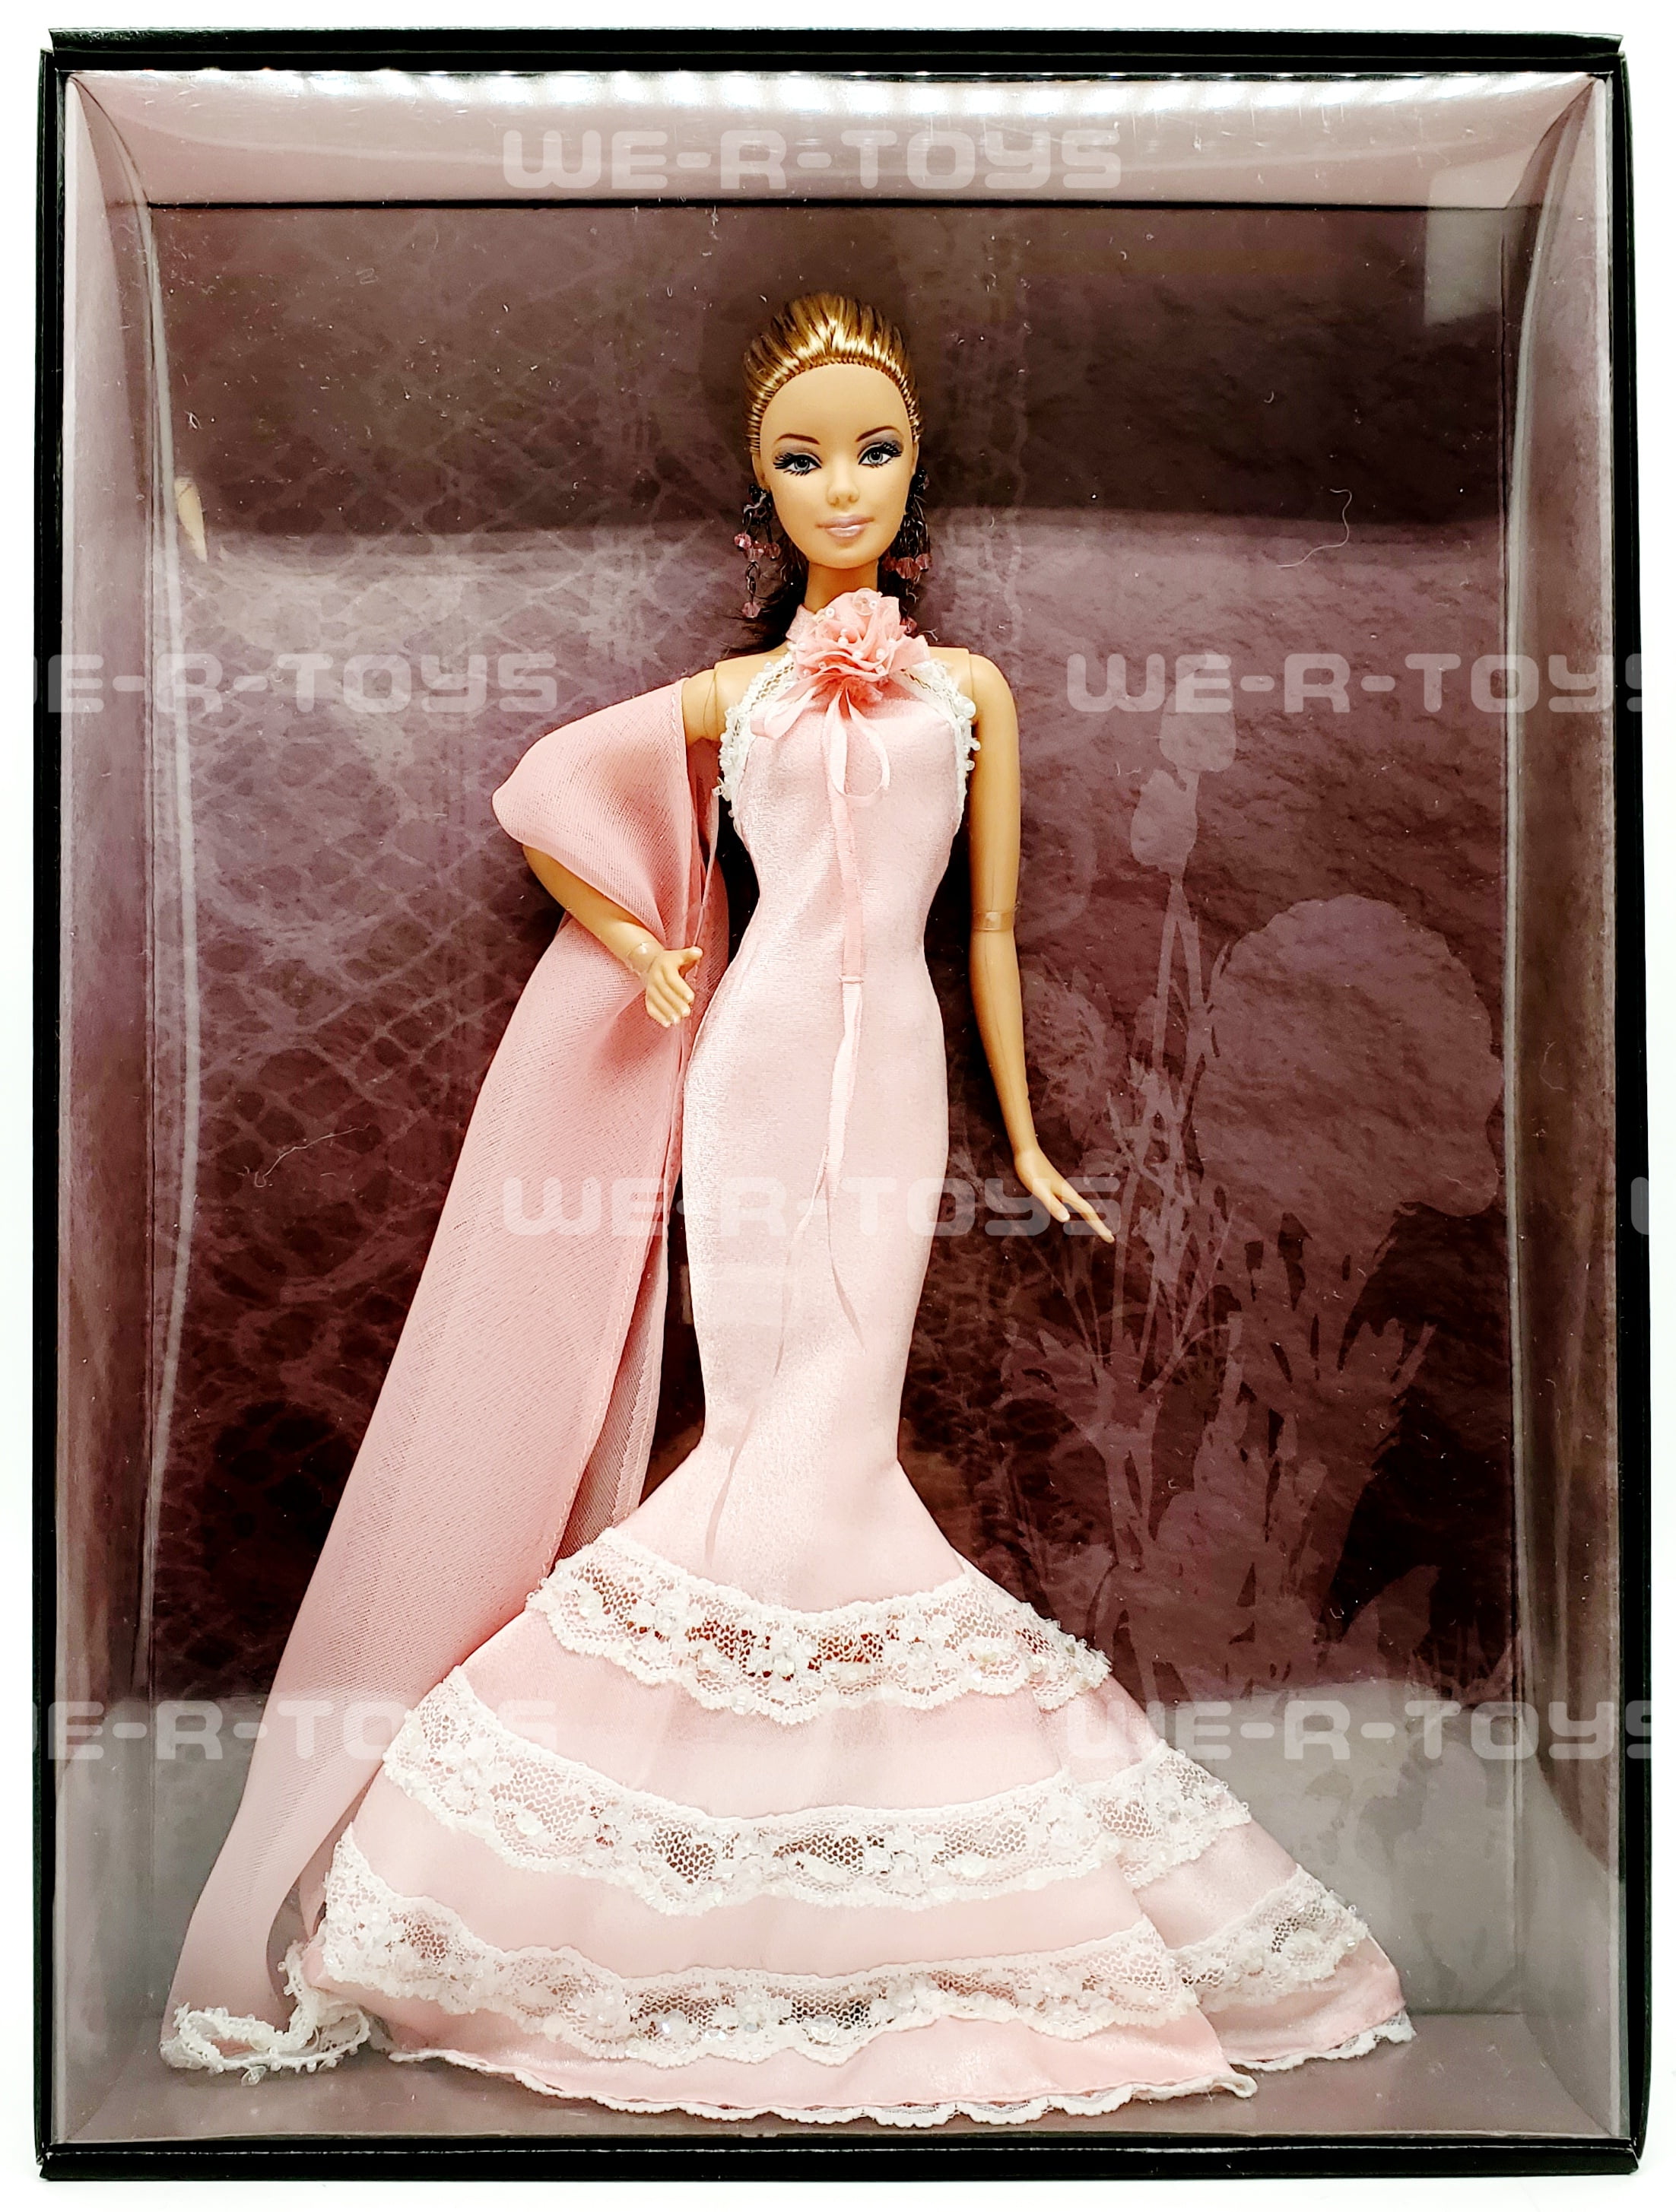 BADGLEY MISCHKA Barbie Designer Collection GOLD LABEL - Badgley